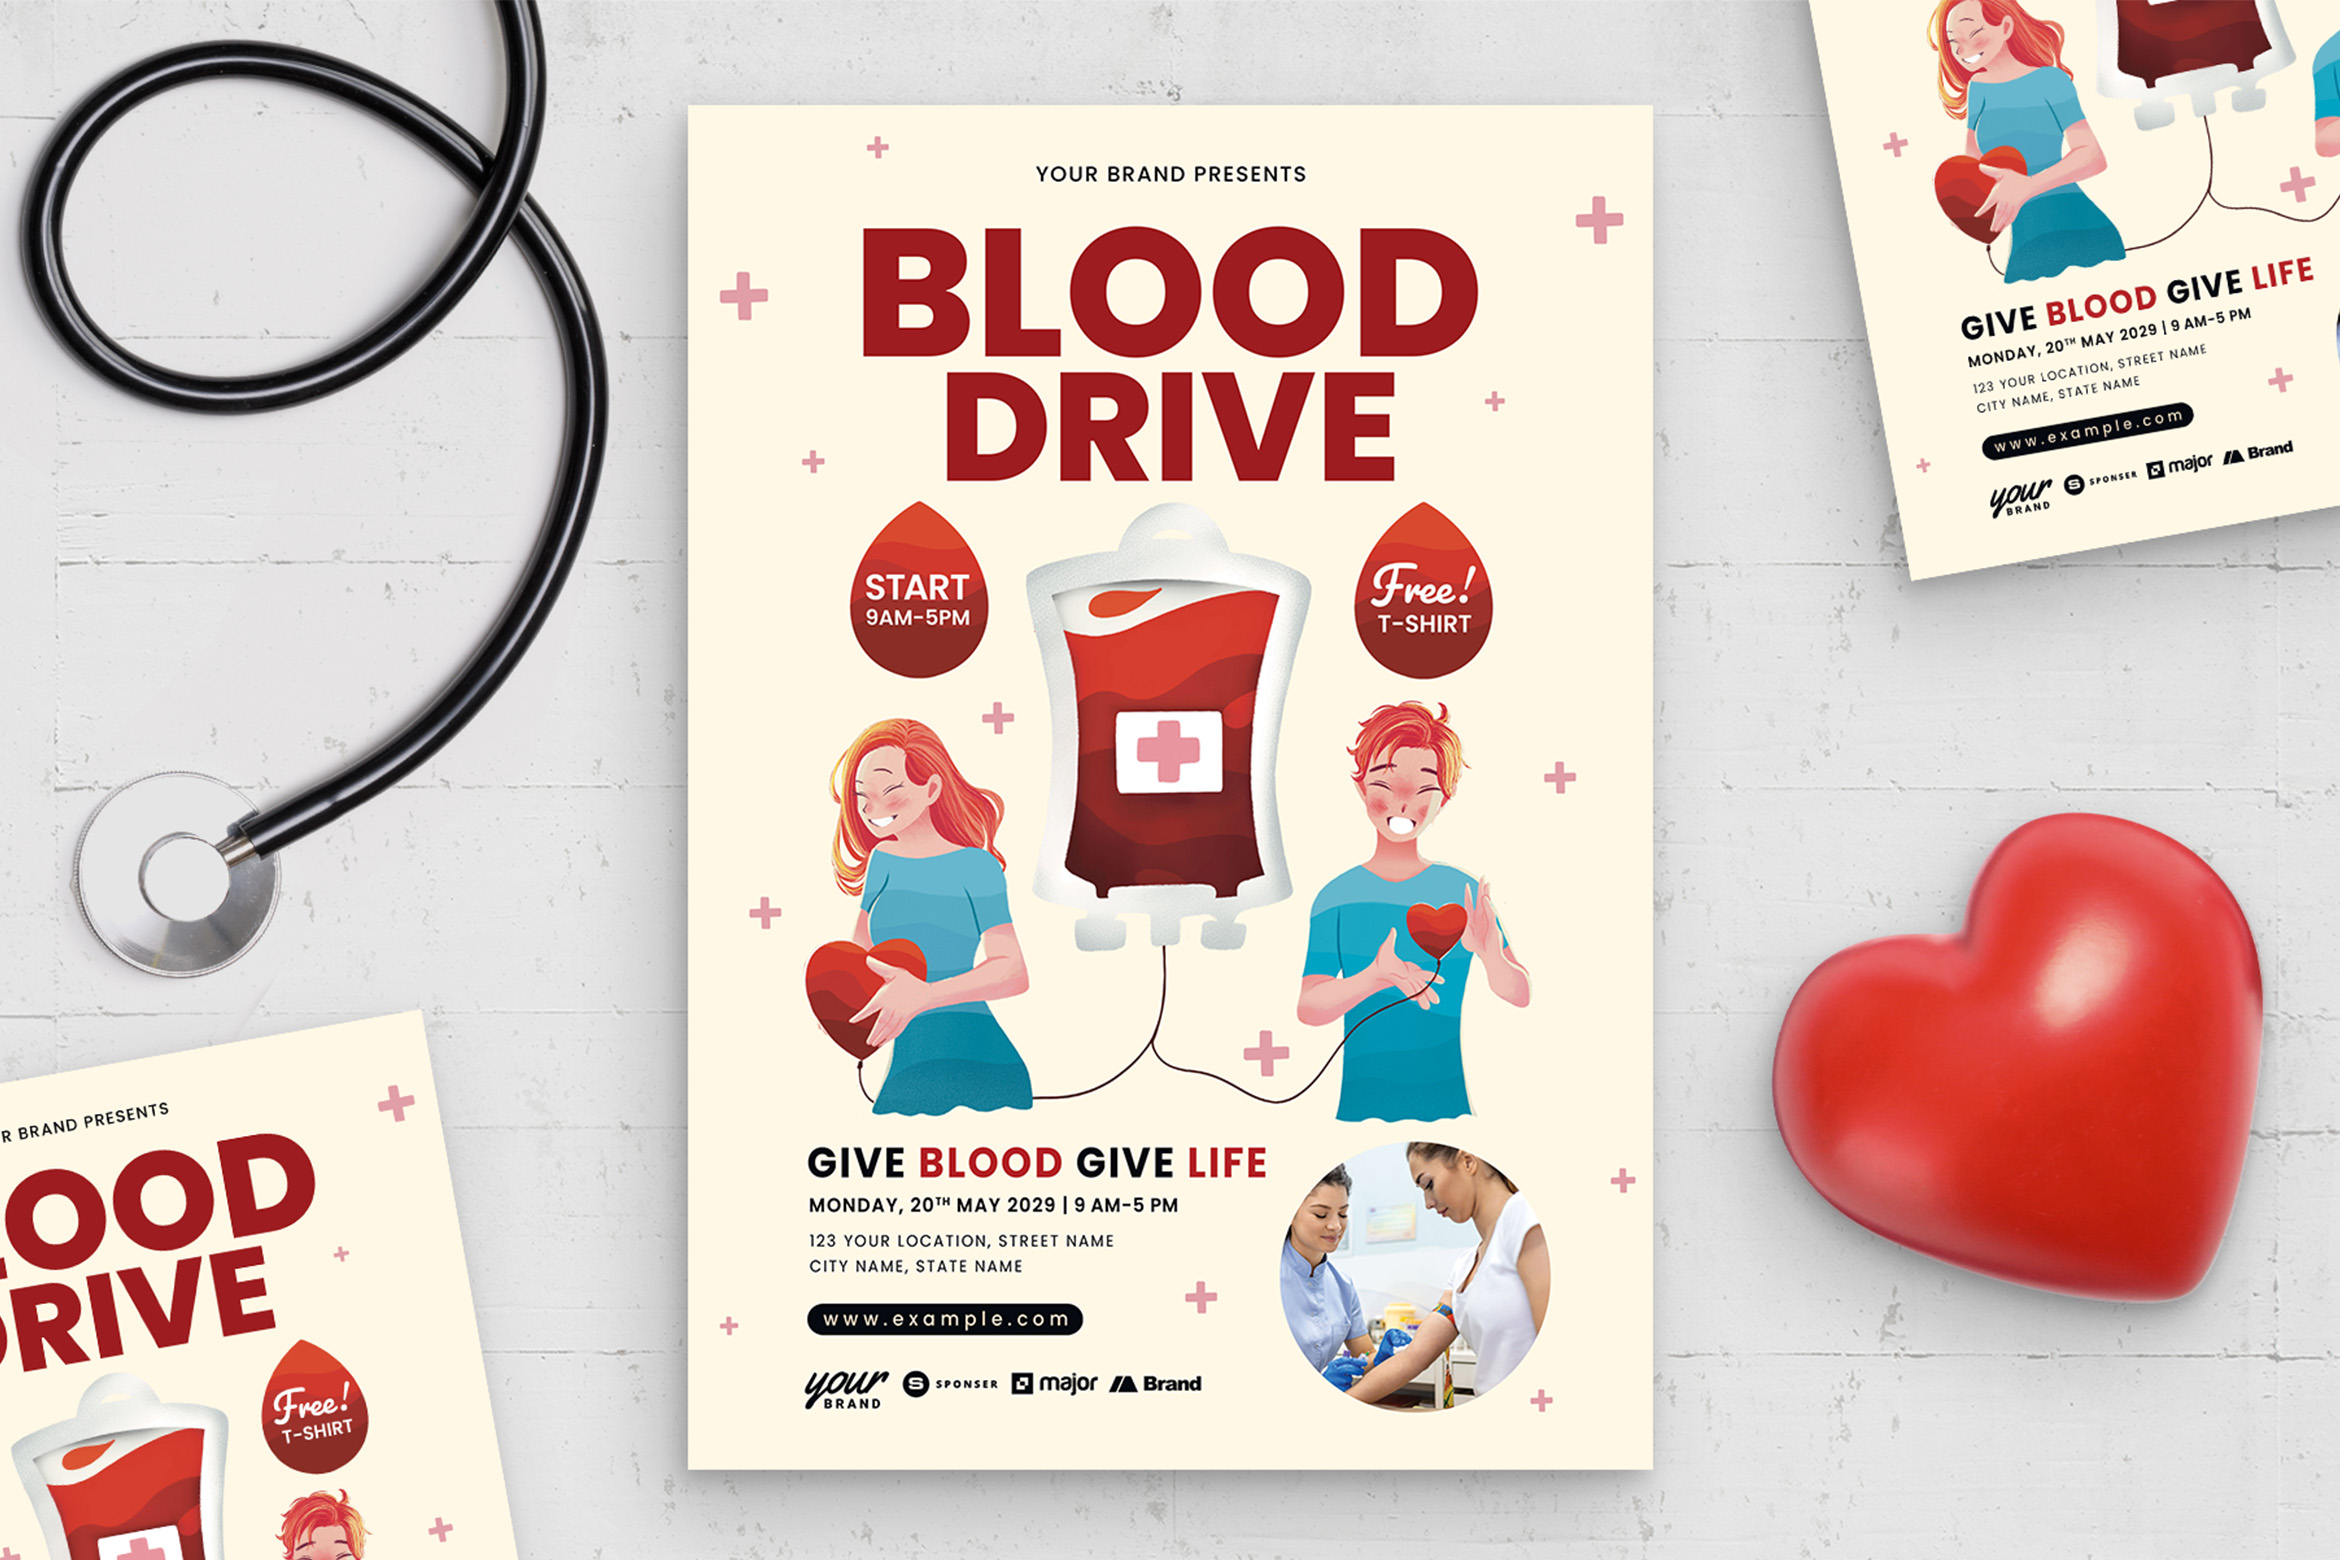 Blood Drive Flyer Template (PSD Format)